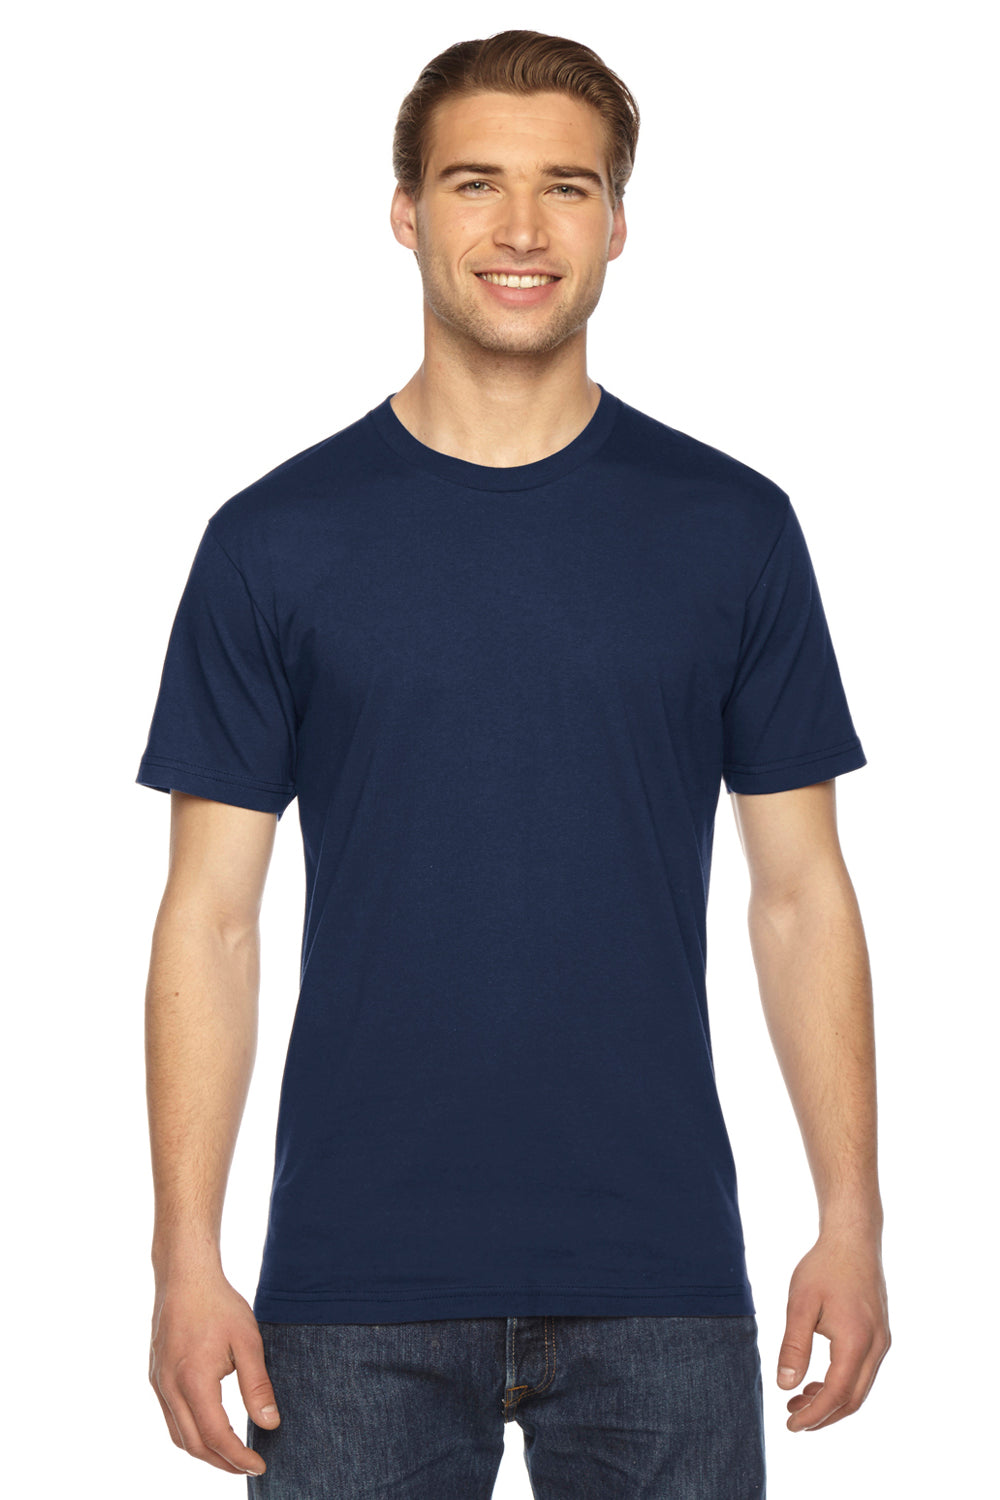 American Apparel 2001 Mens USA Made Fine Jersey Short Sleeve Crewneck T-Shirt Navy Blue Front